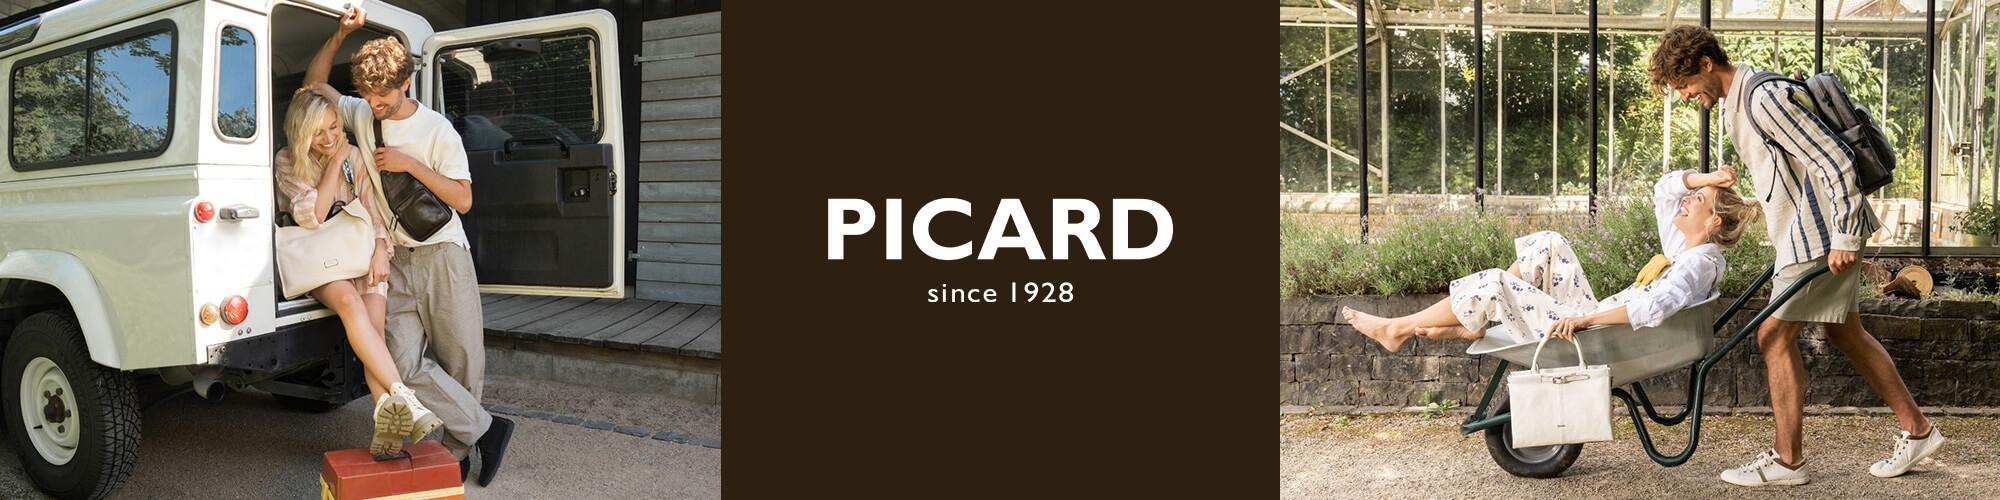 Picard Bags & Wallets - shop online